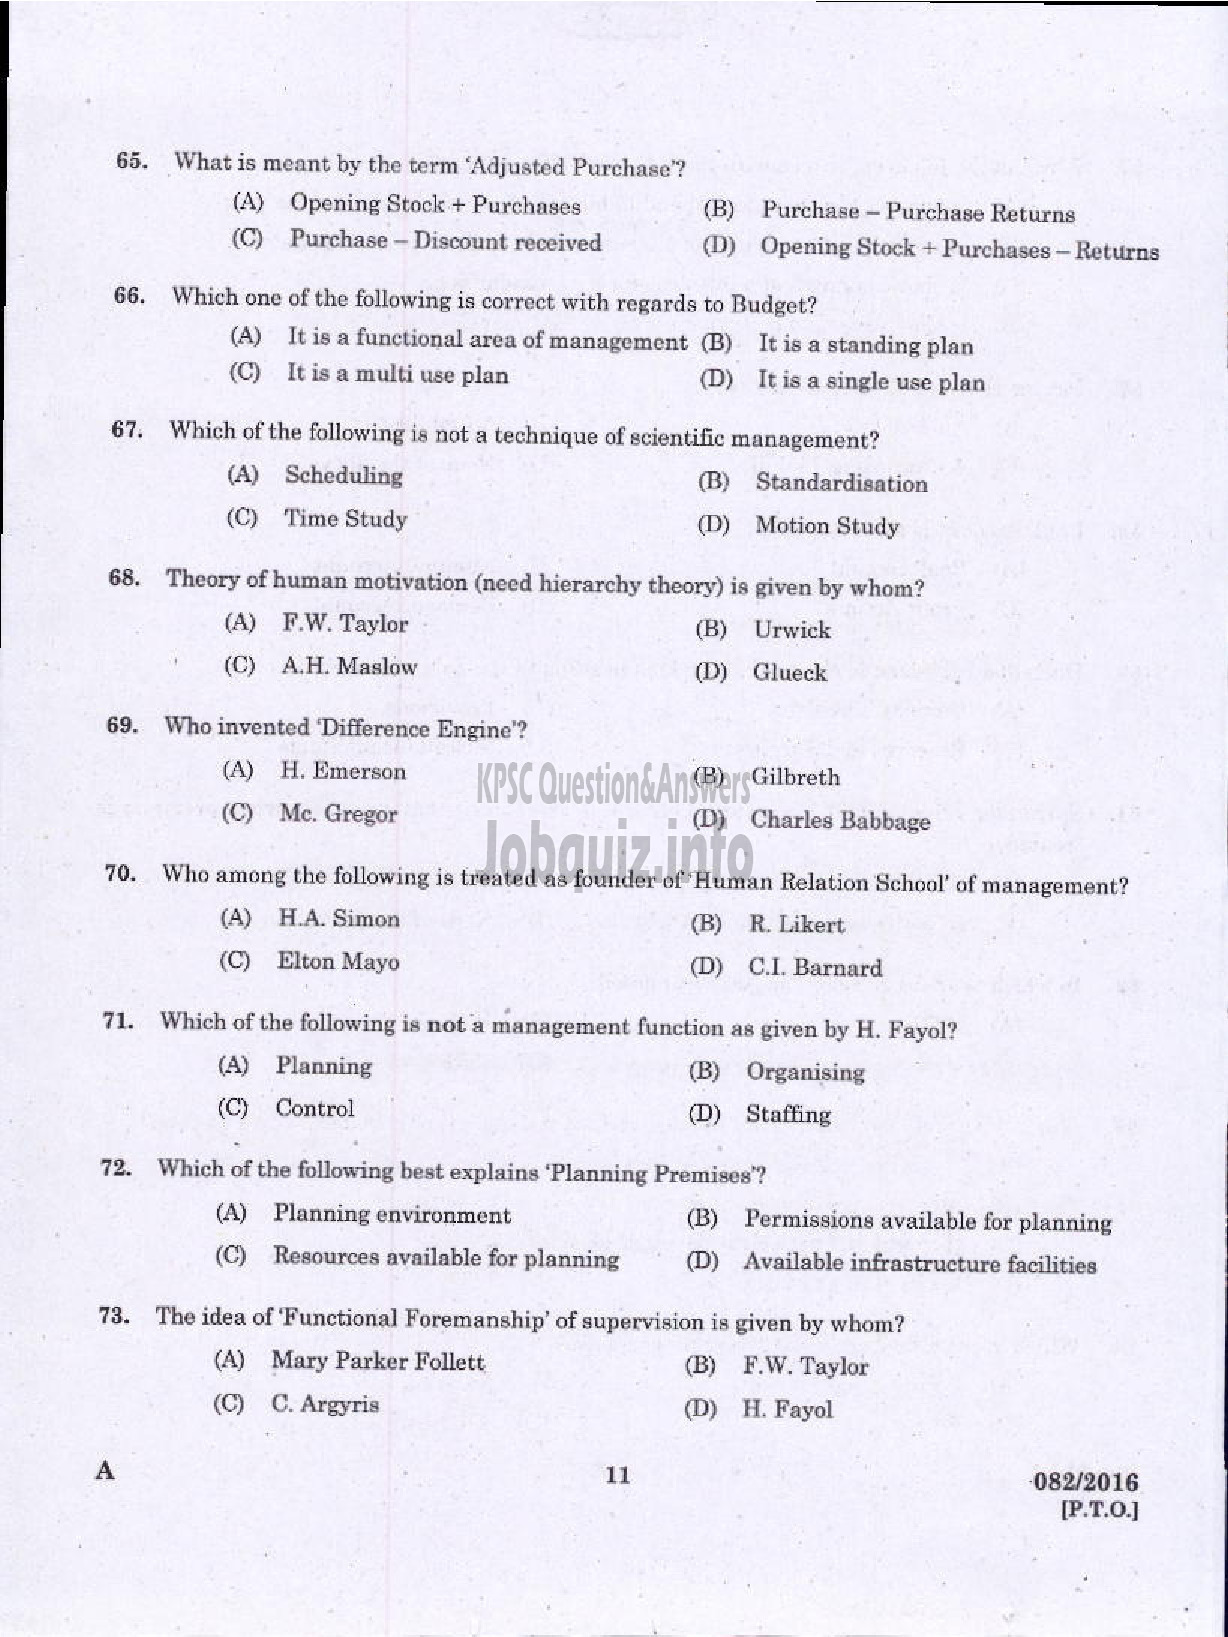 Kerala PSC Question Paper - ACCOUNTANT /JUNIOR ACCOUNTANT /ACCOUNTS ASSISTANT VARIOUS COMPANIES/CORPNS/BOARDS/SOCIETIES-9